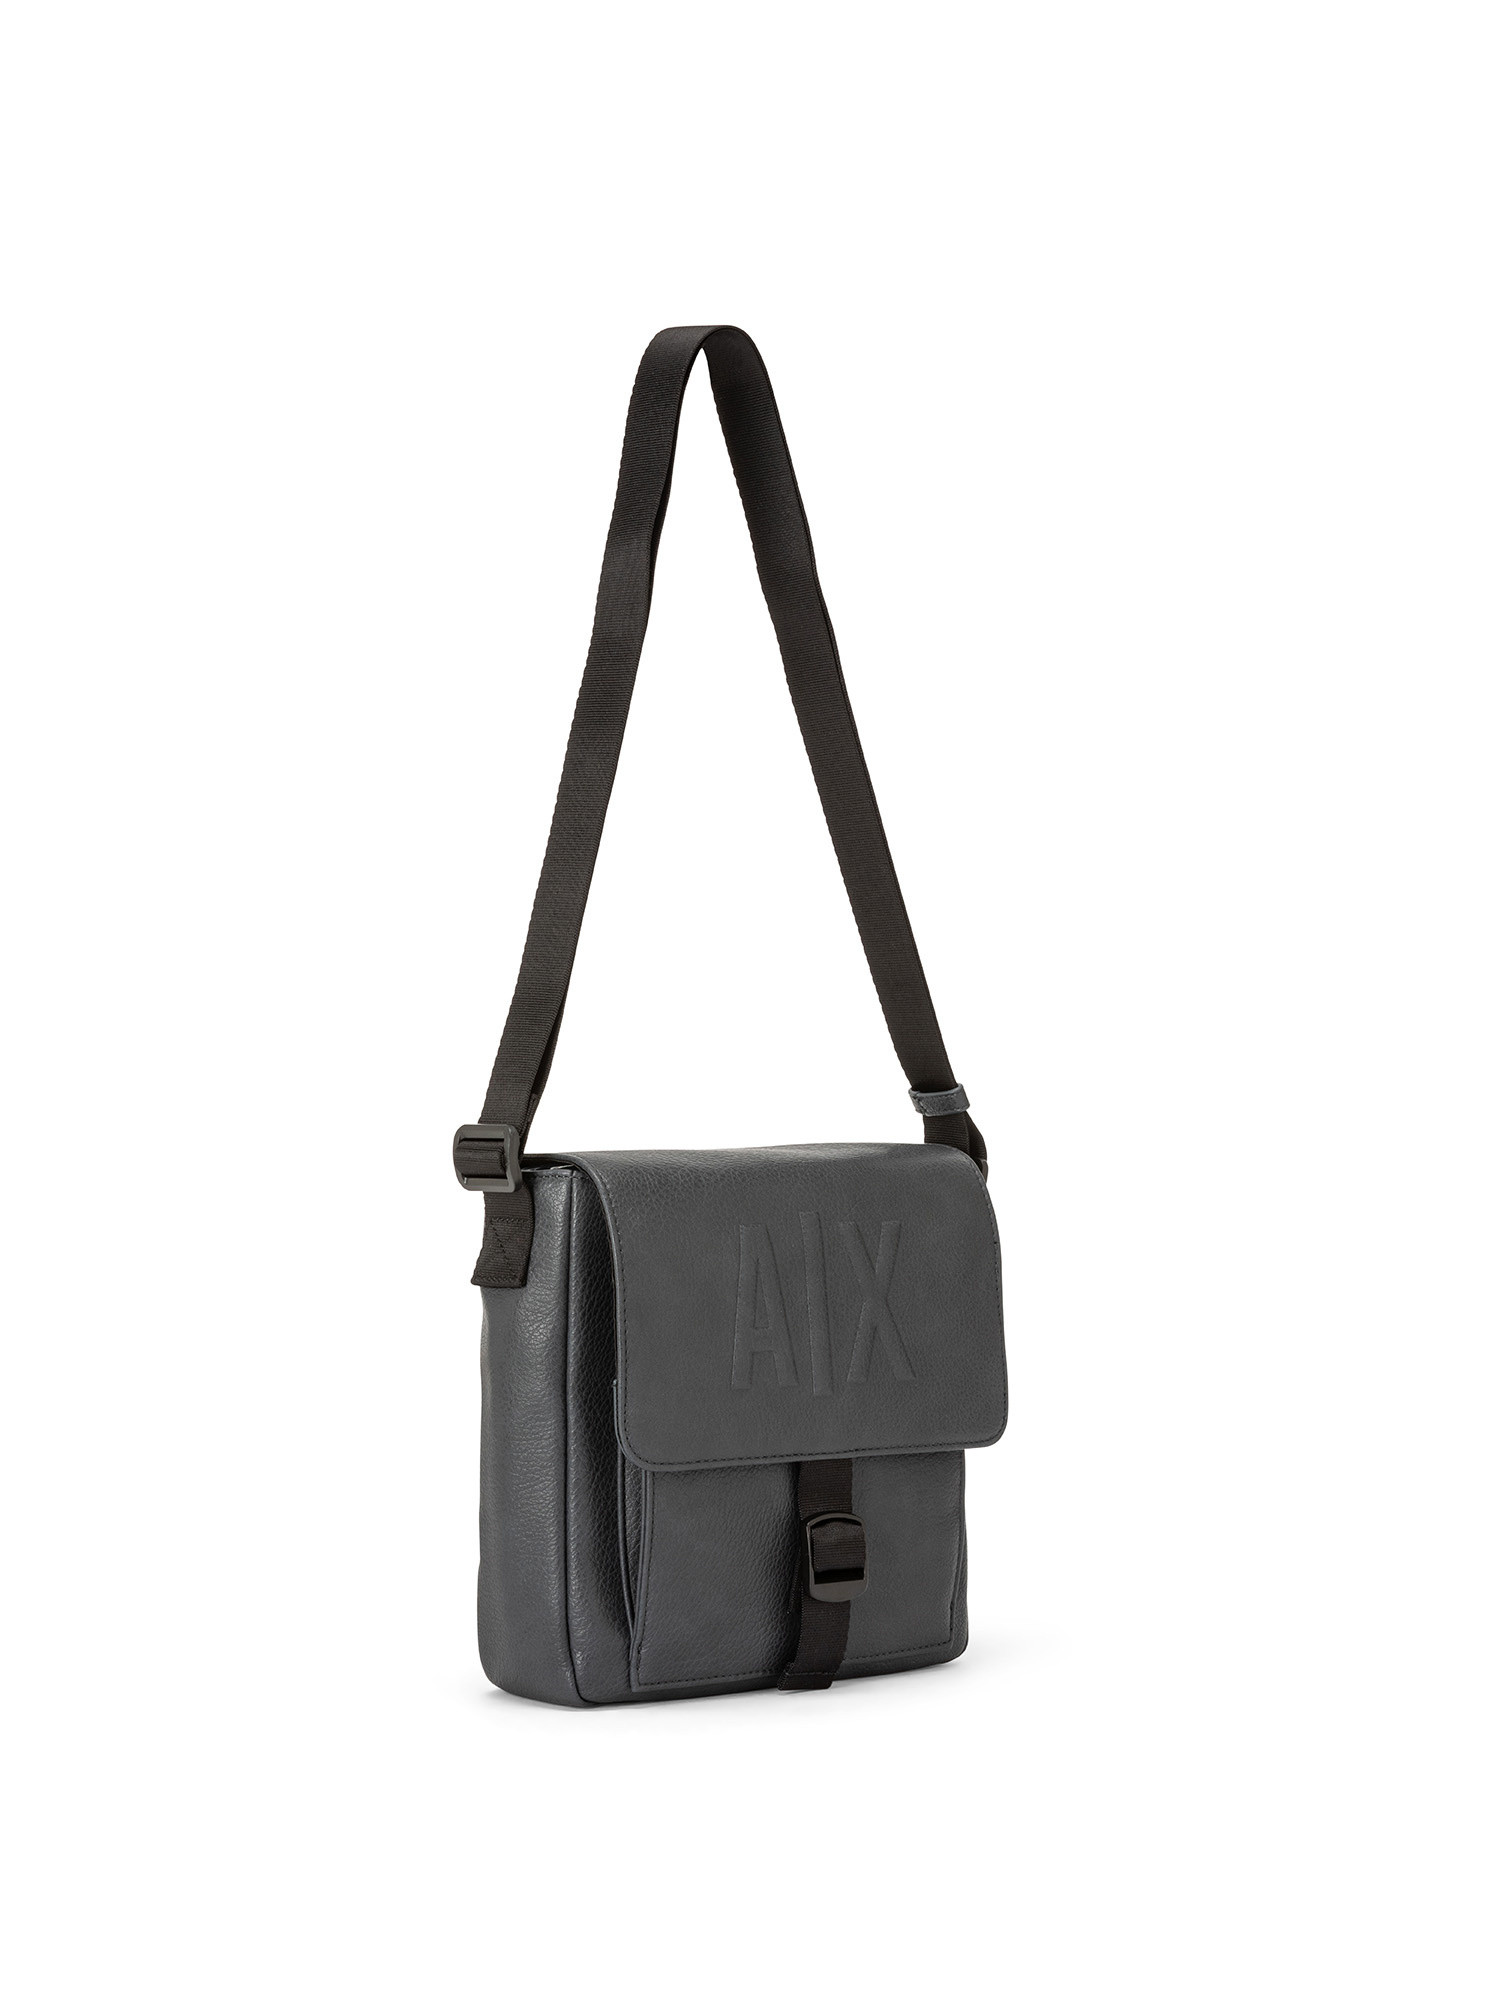 Armani Exchange - Bag with logo, Grey, large image number 1